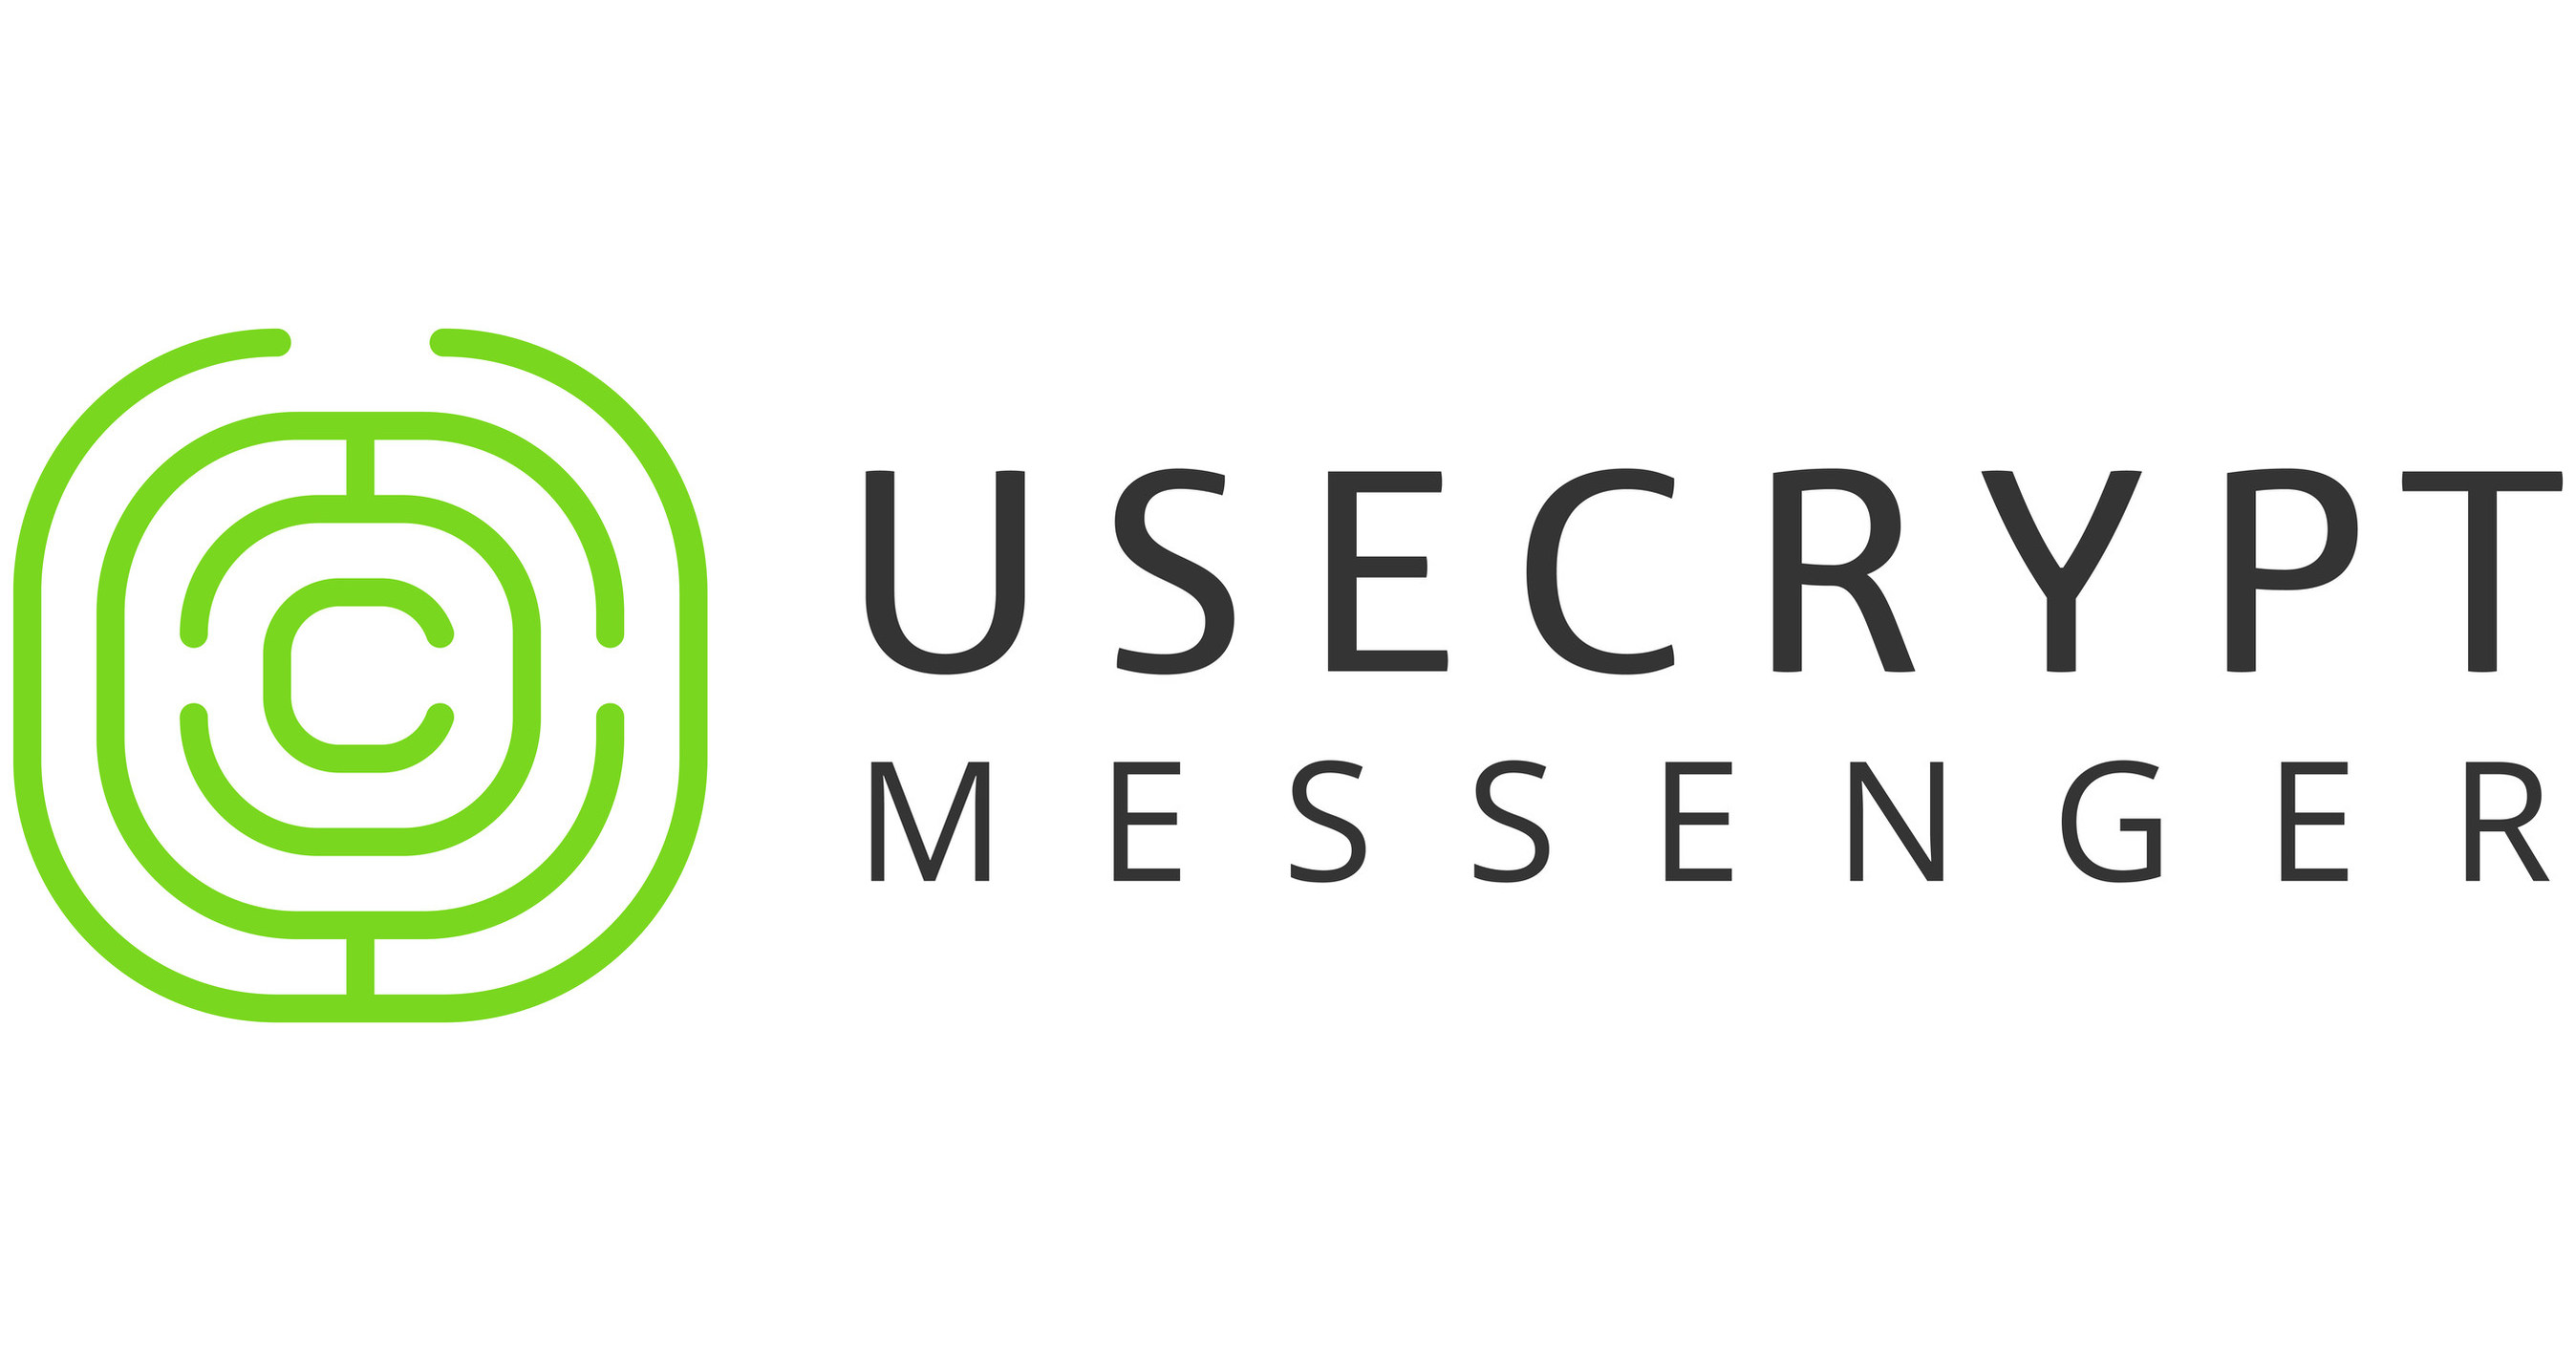 Usecrypt Messenger: Eine revolutionäre mobile Kommunikations-App mit